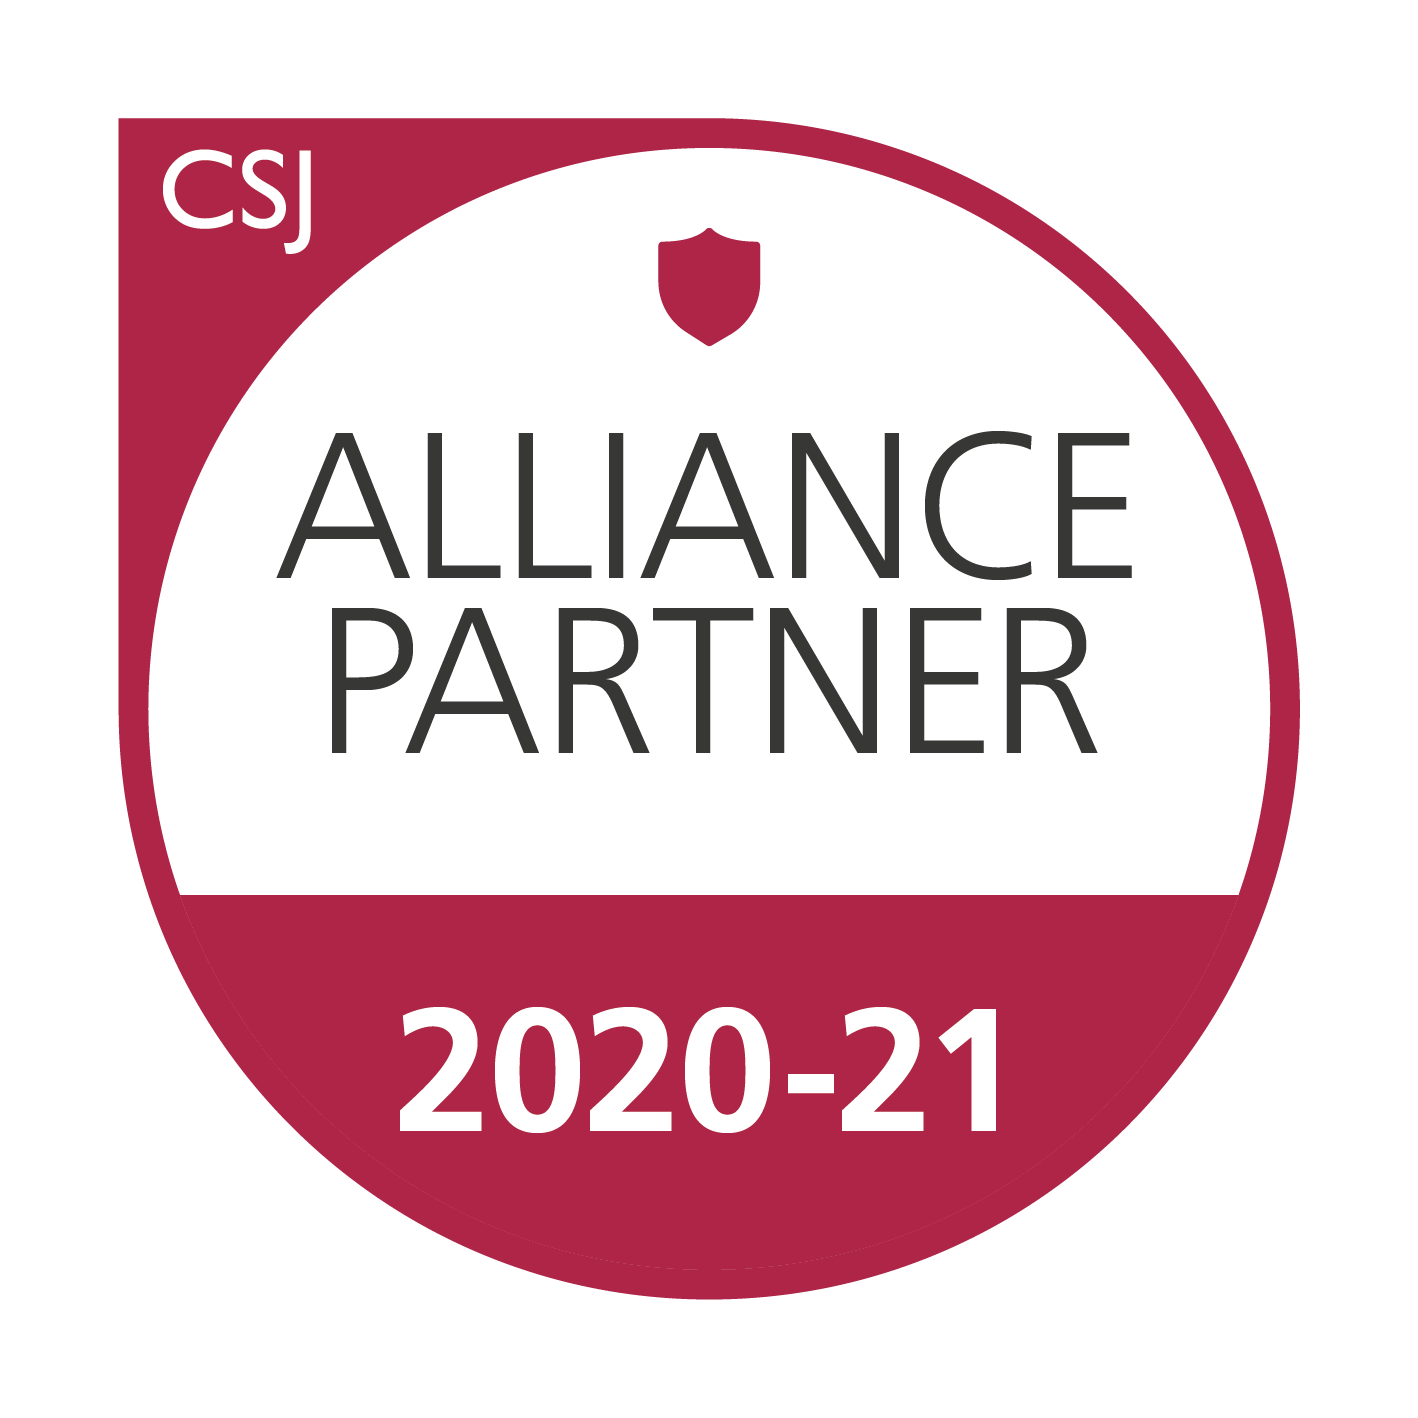 Centre for Social Justice Alliance Partner logo